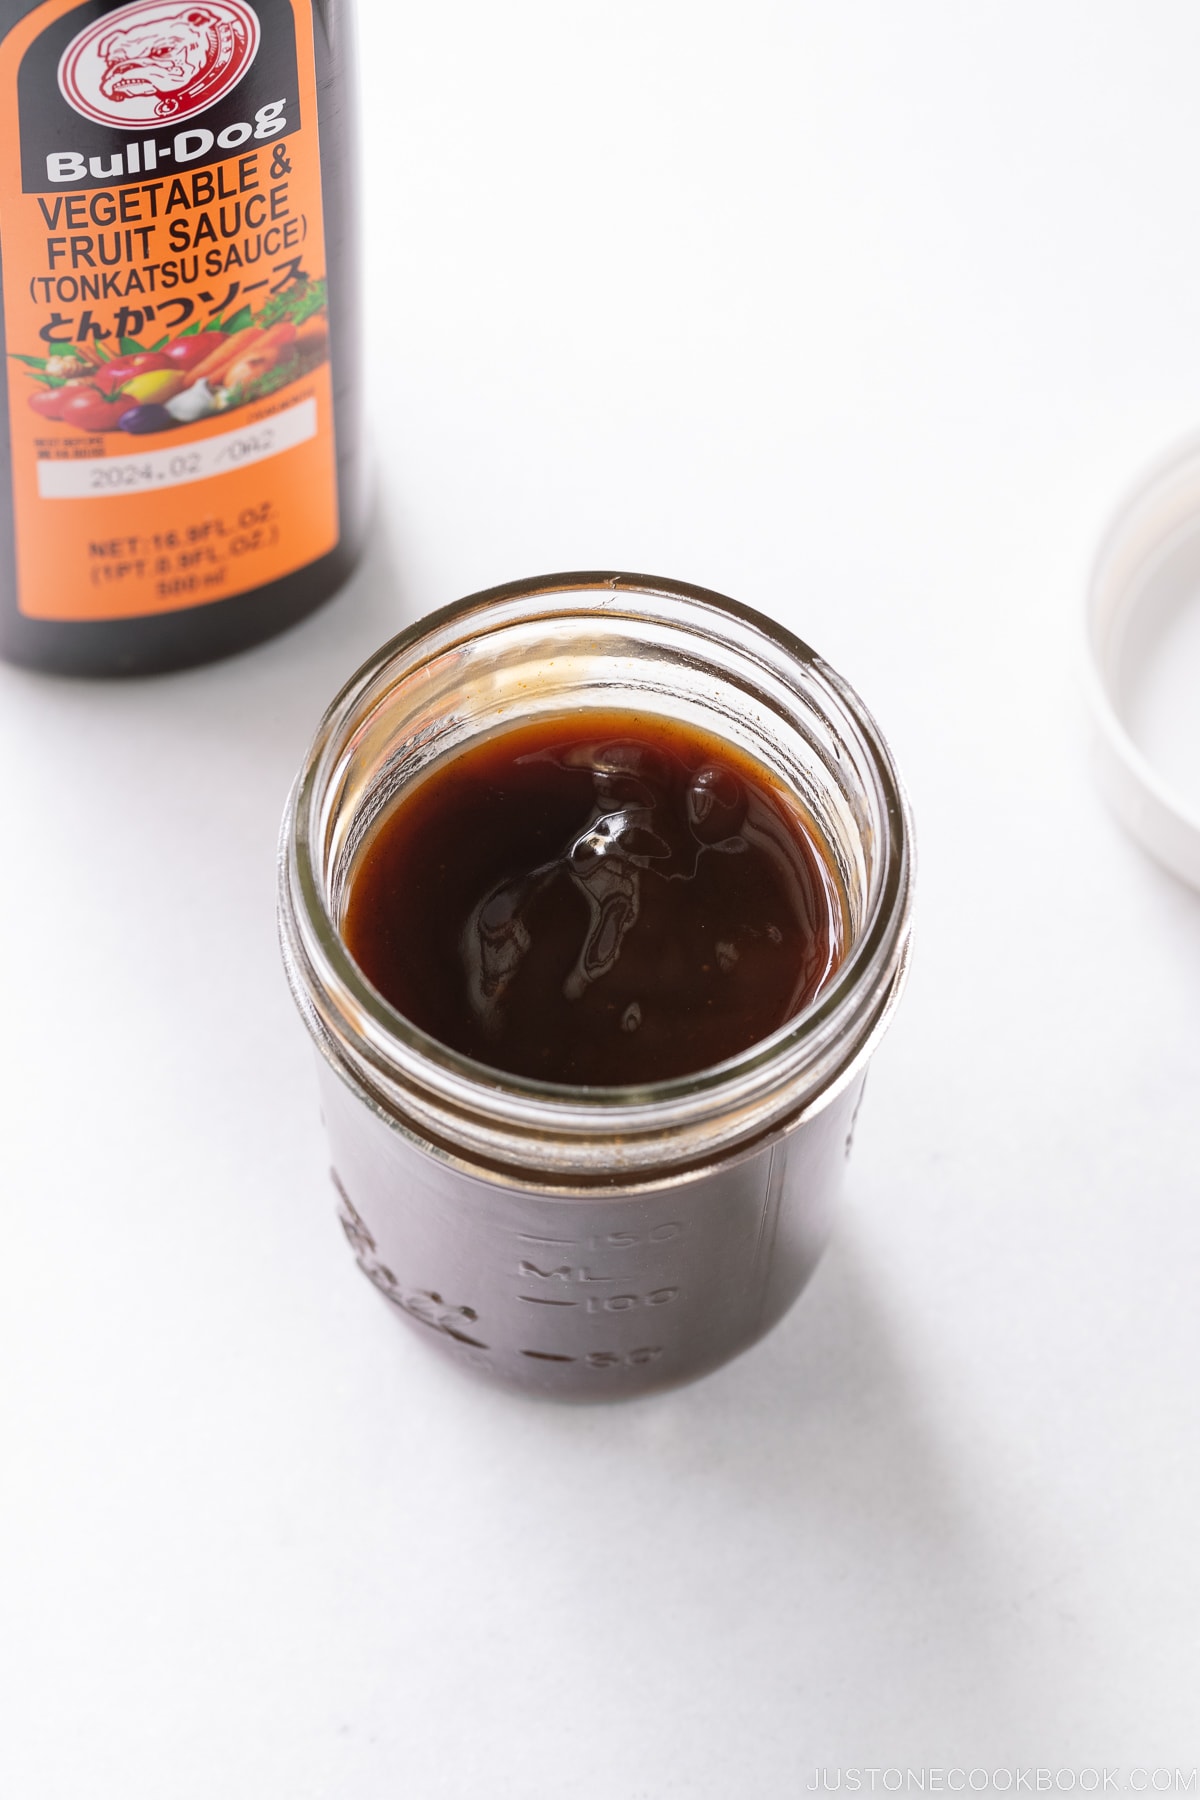 A Bull-Dog Vegetable Fruit Sauce (Tonkatsu Sauce) and homemade tonkatsu sauce in a mason jar.